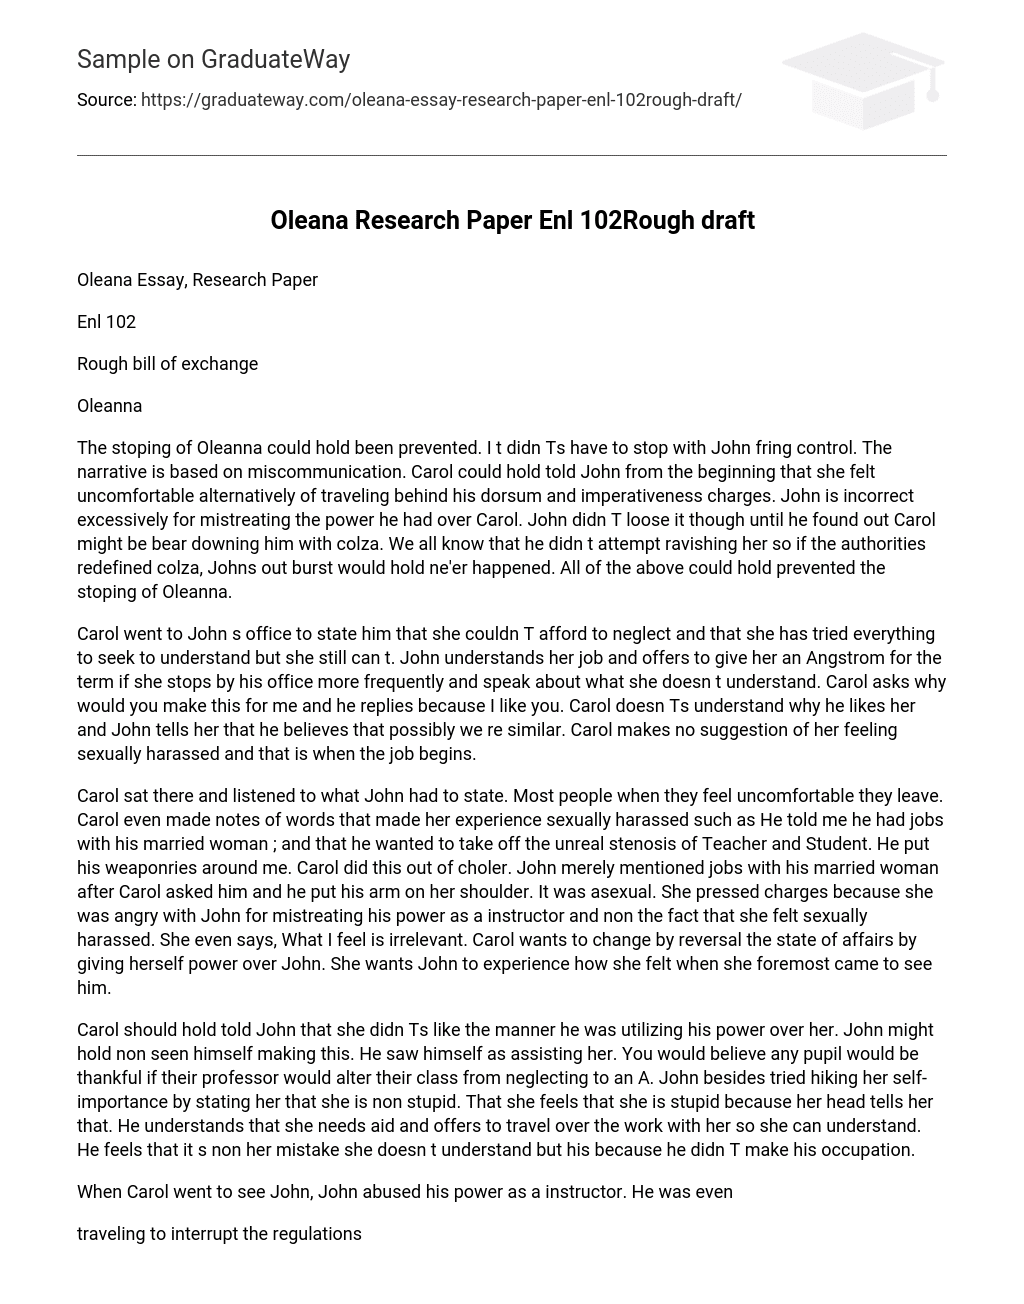 Oleana Research Paper Enl 102Rough draft